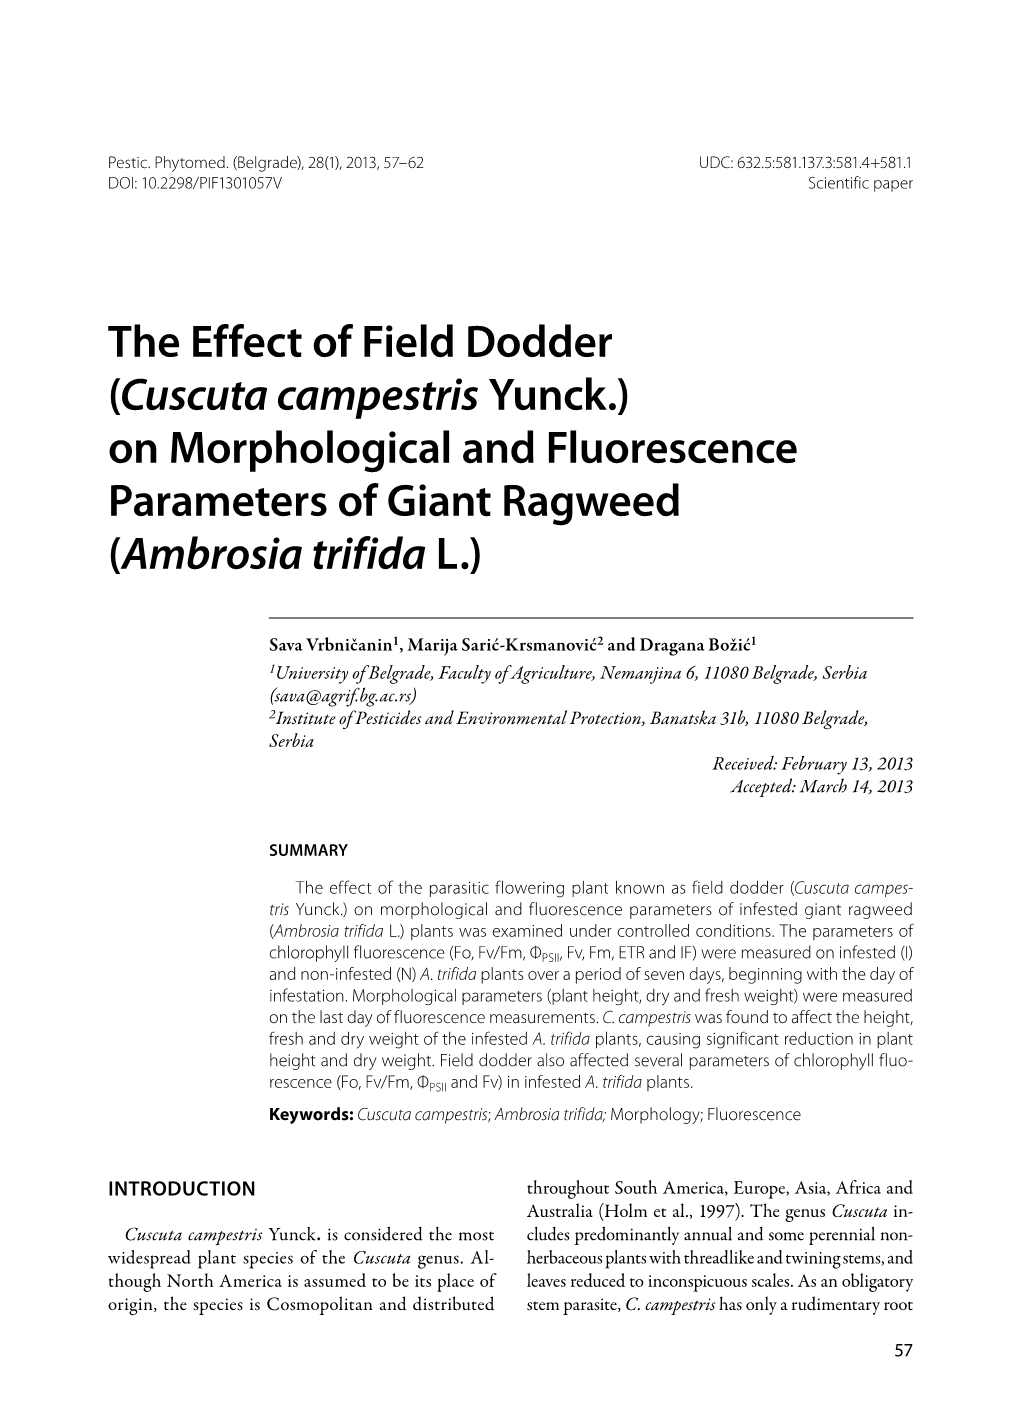 Cuscuta Campestris Yunck.) on Morphological and Fluorescence Parameters of Giant Ragweed (Ambrosia Trifida L.